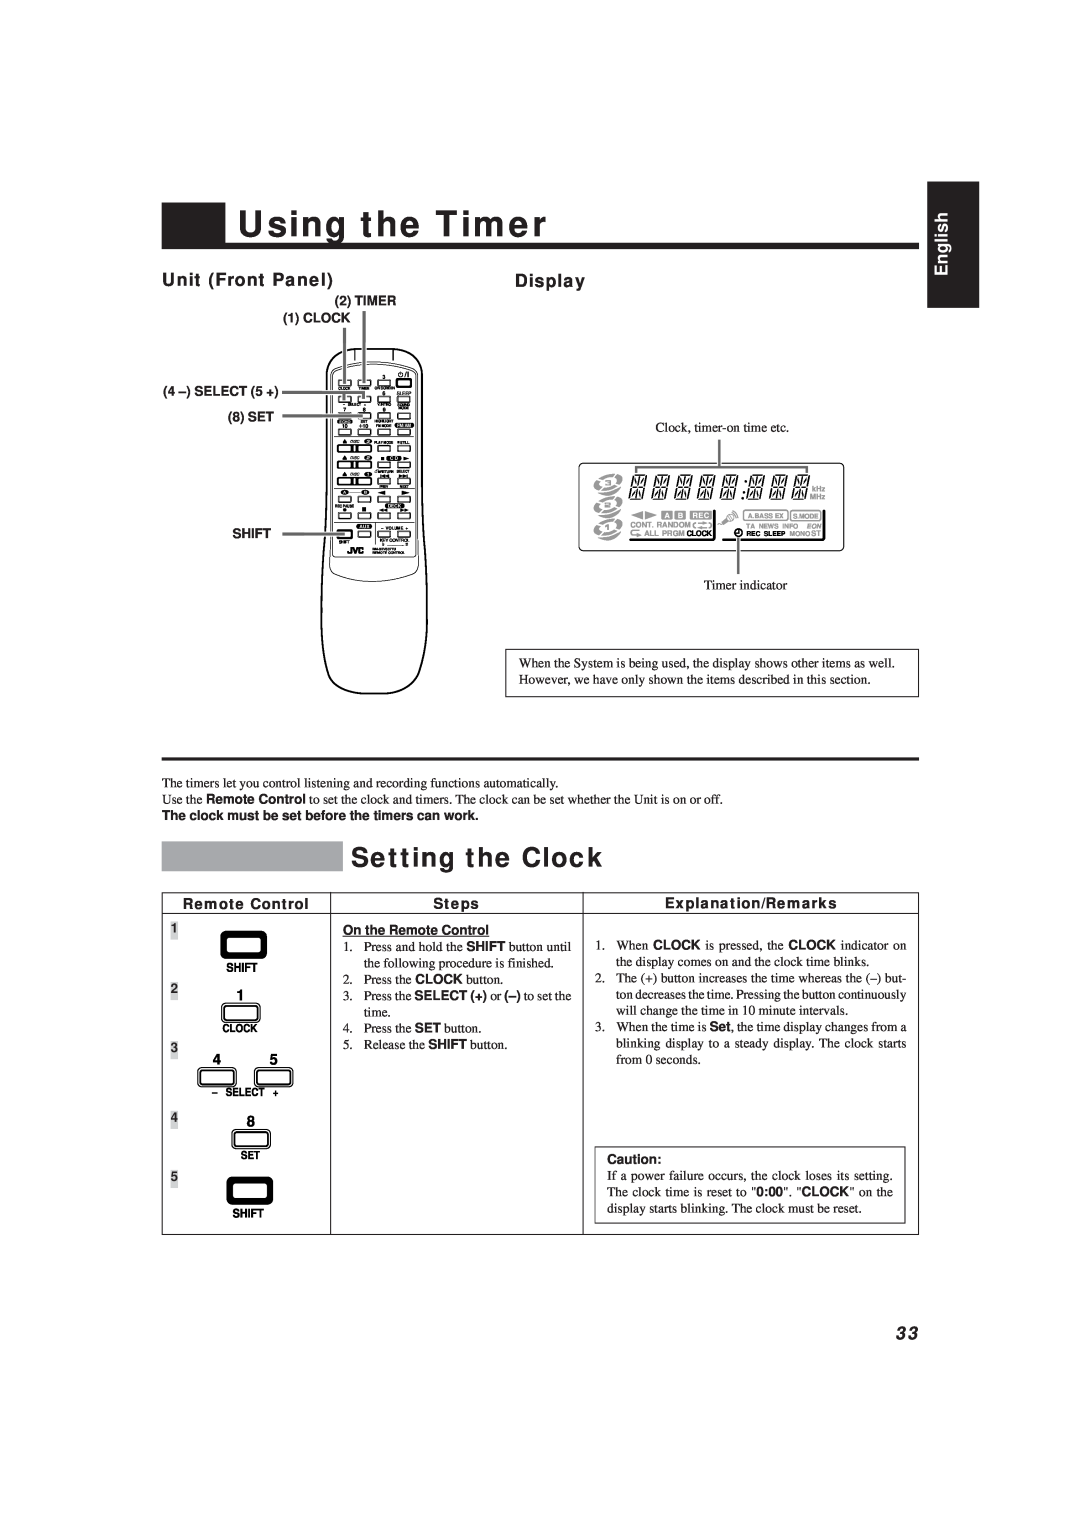 JVC MX-V588T, MX-V508T manual Using the Timer, Setting the Clock, English, Remote Control, Steps, Explanation/Remarks 